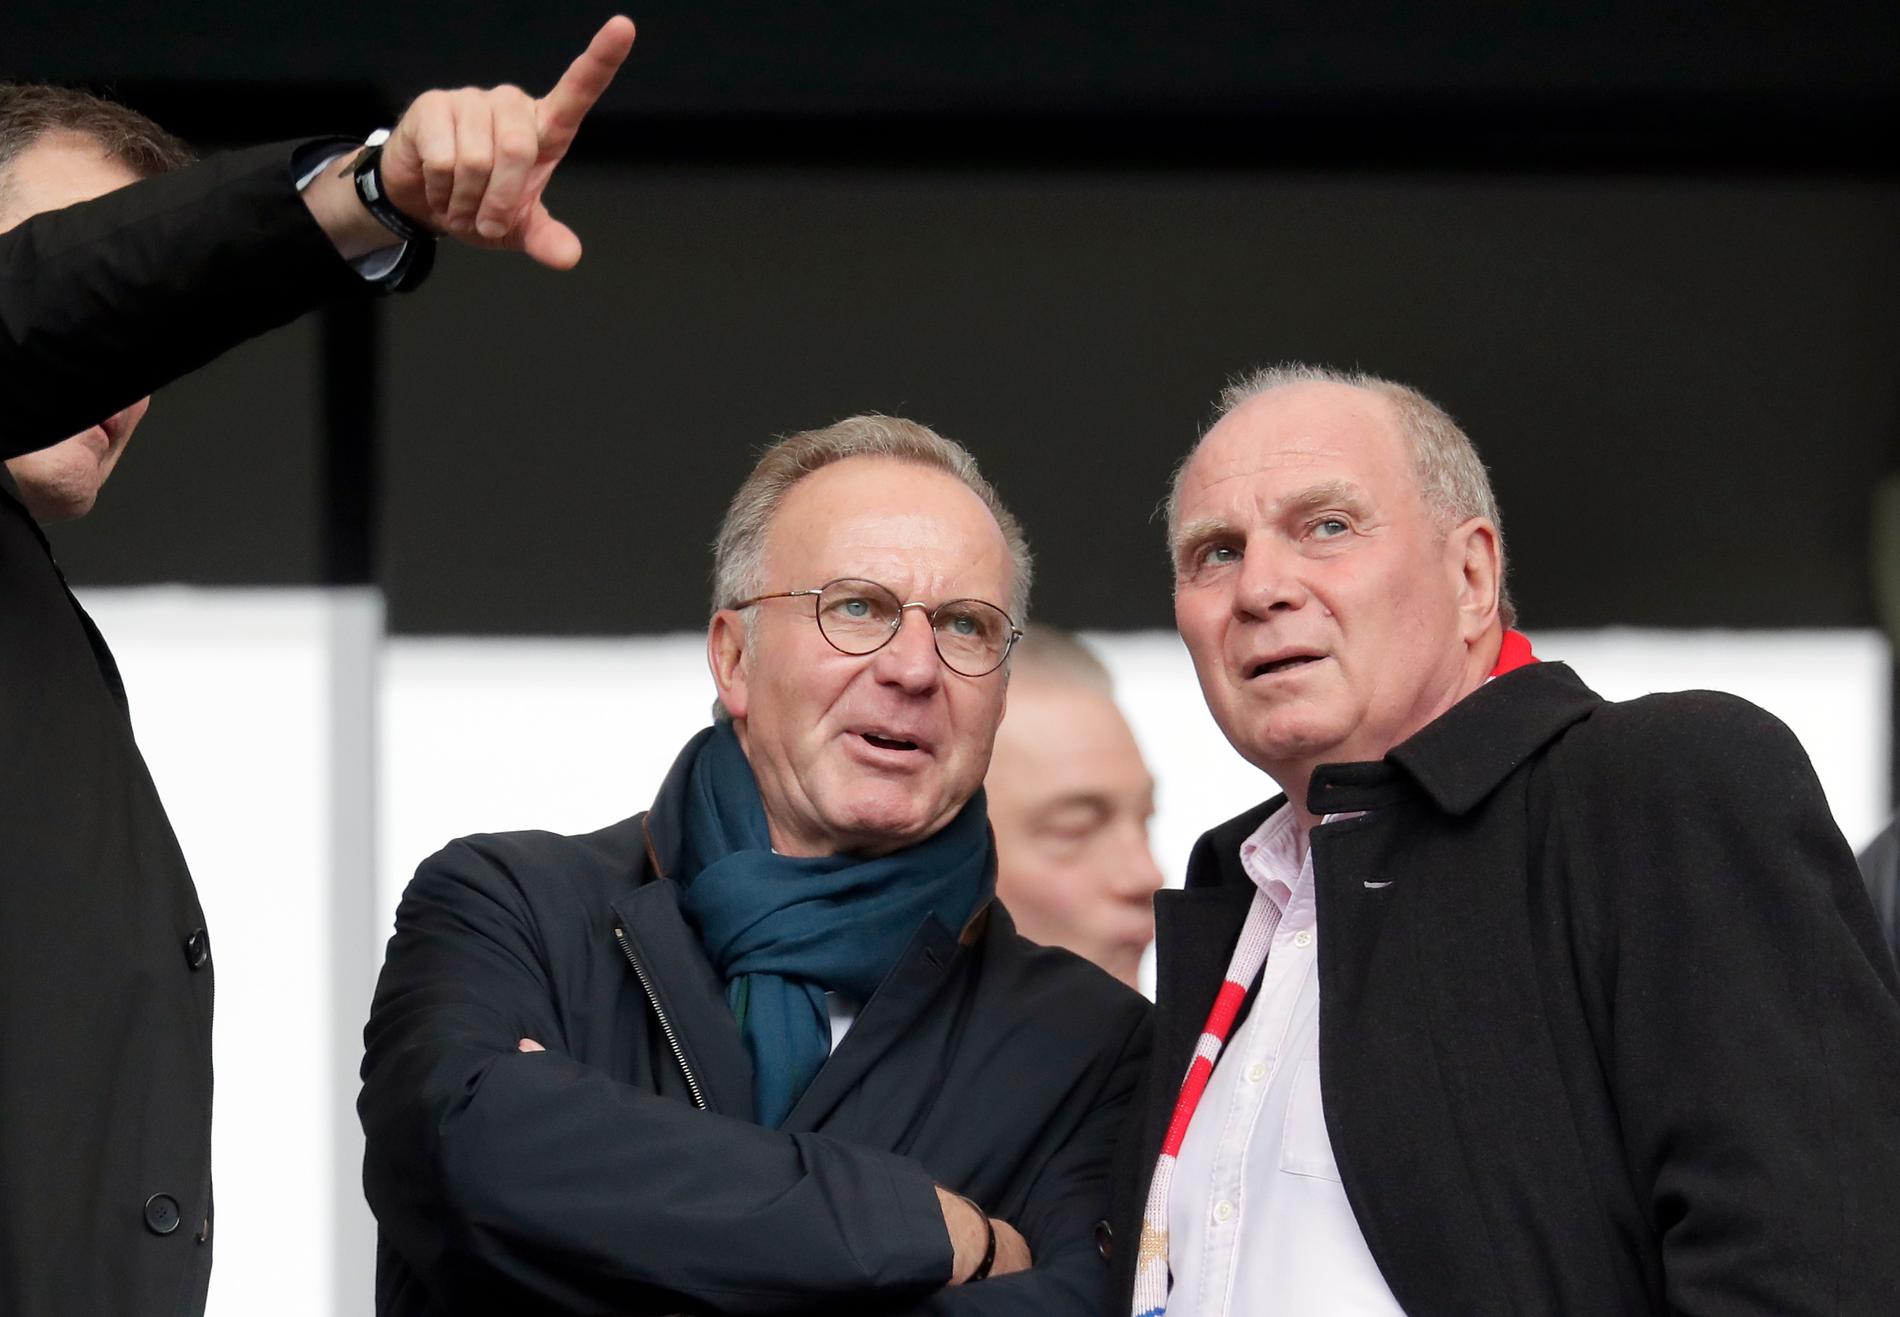 Bayern Münchens president Uli Hoeness till höger.